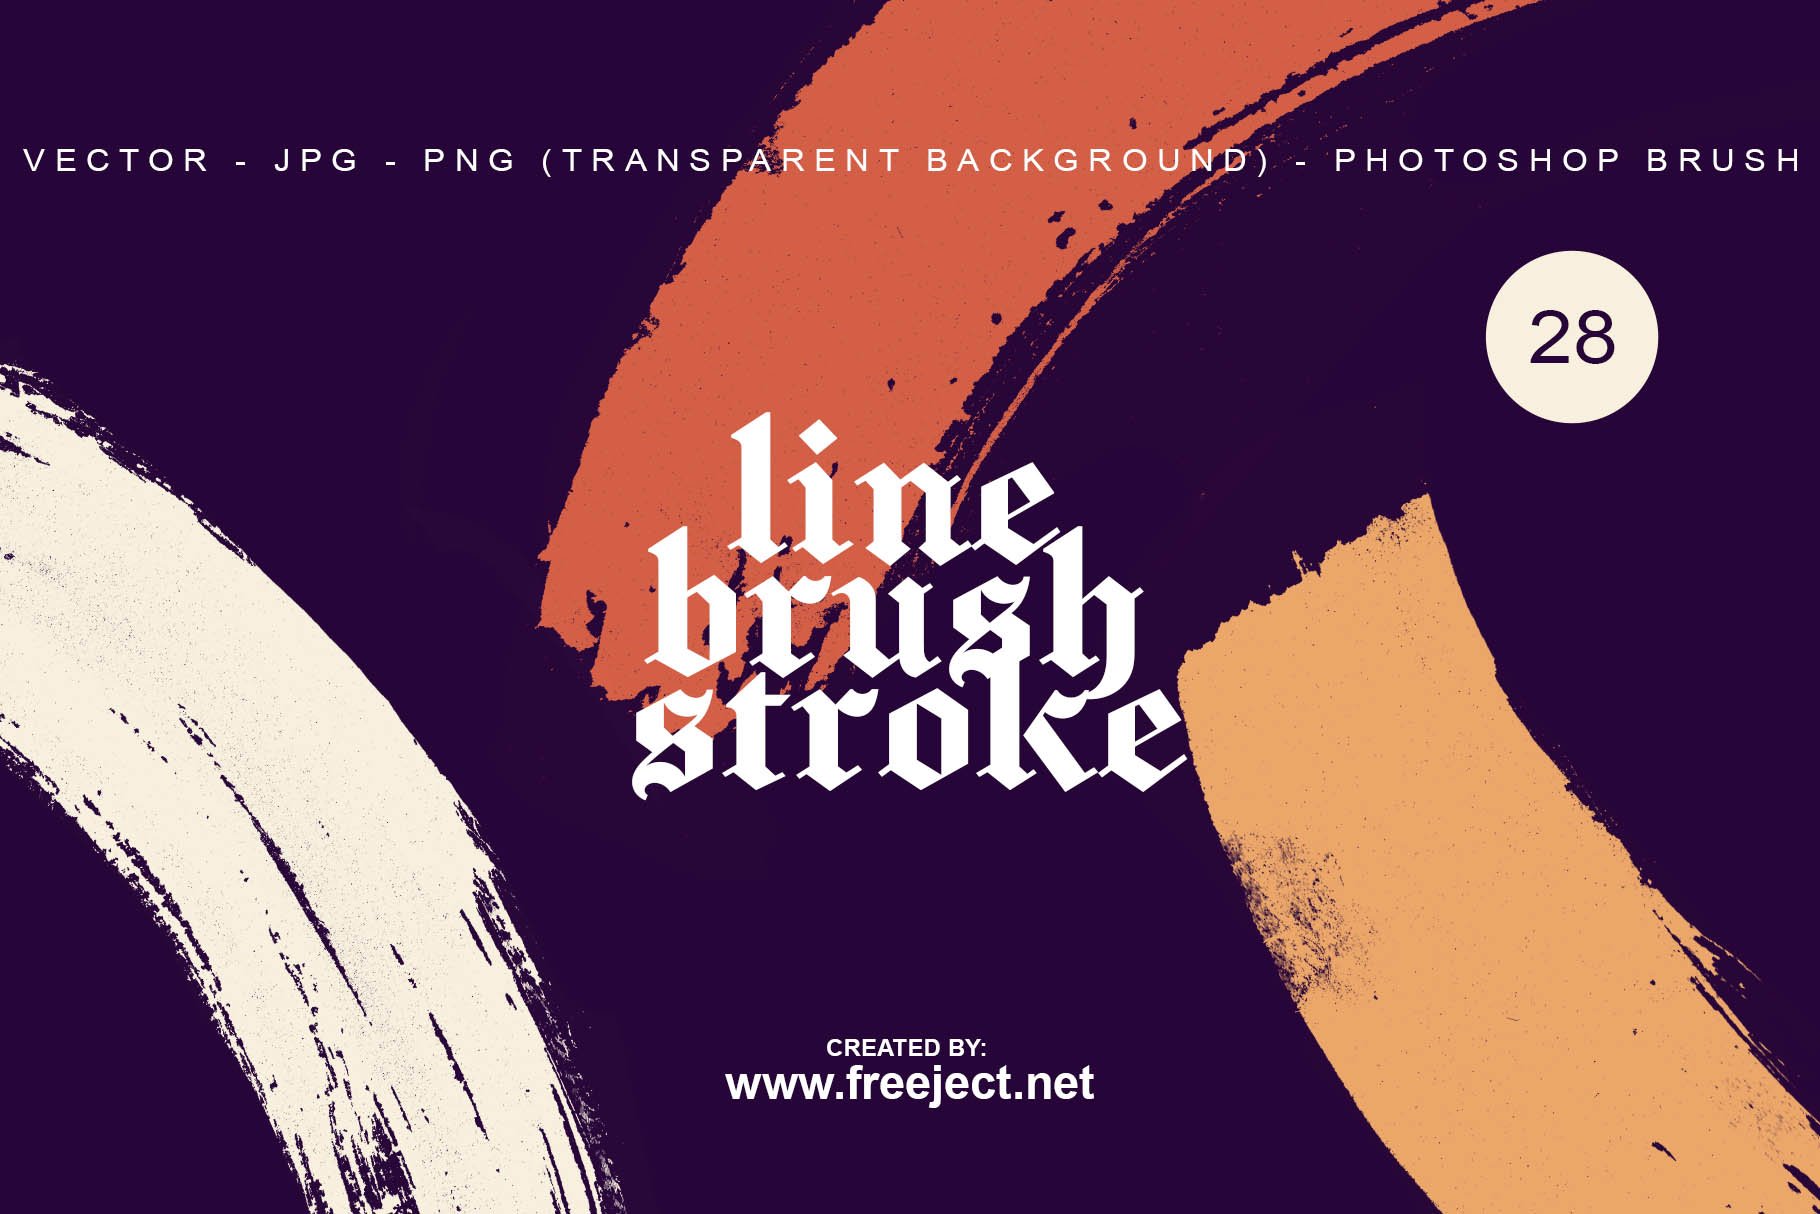 Line Brush Stroke Vector, PNG, Brushcover image.